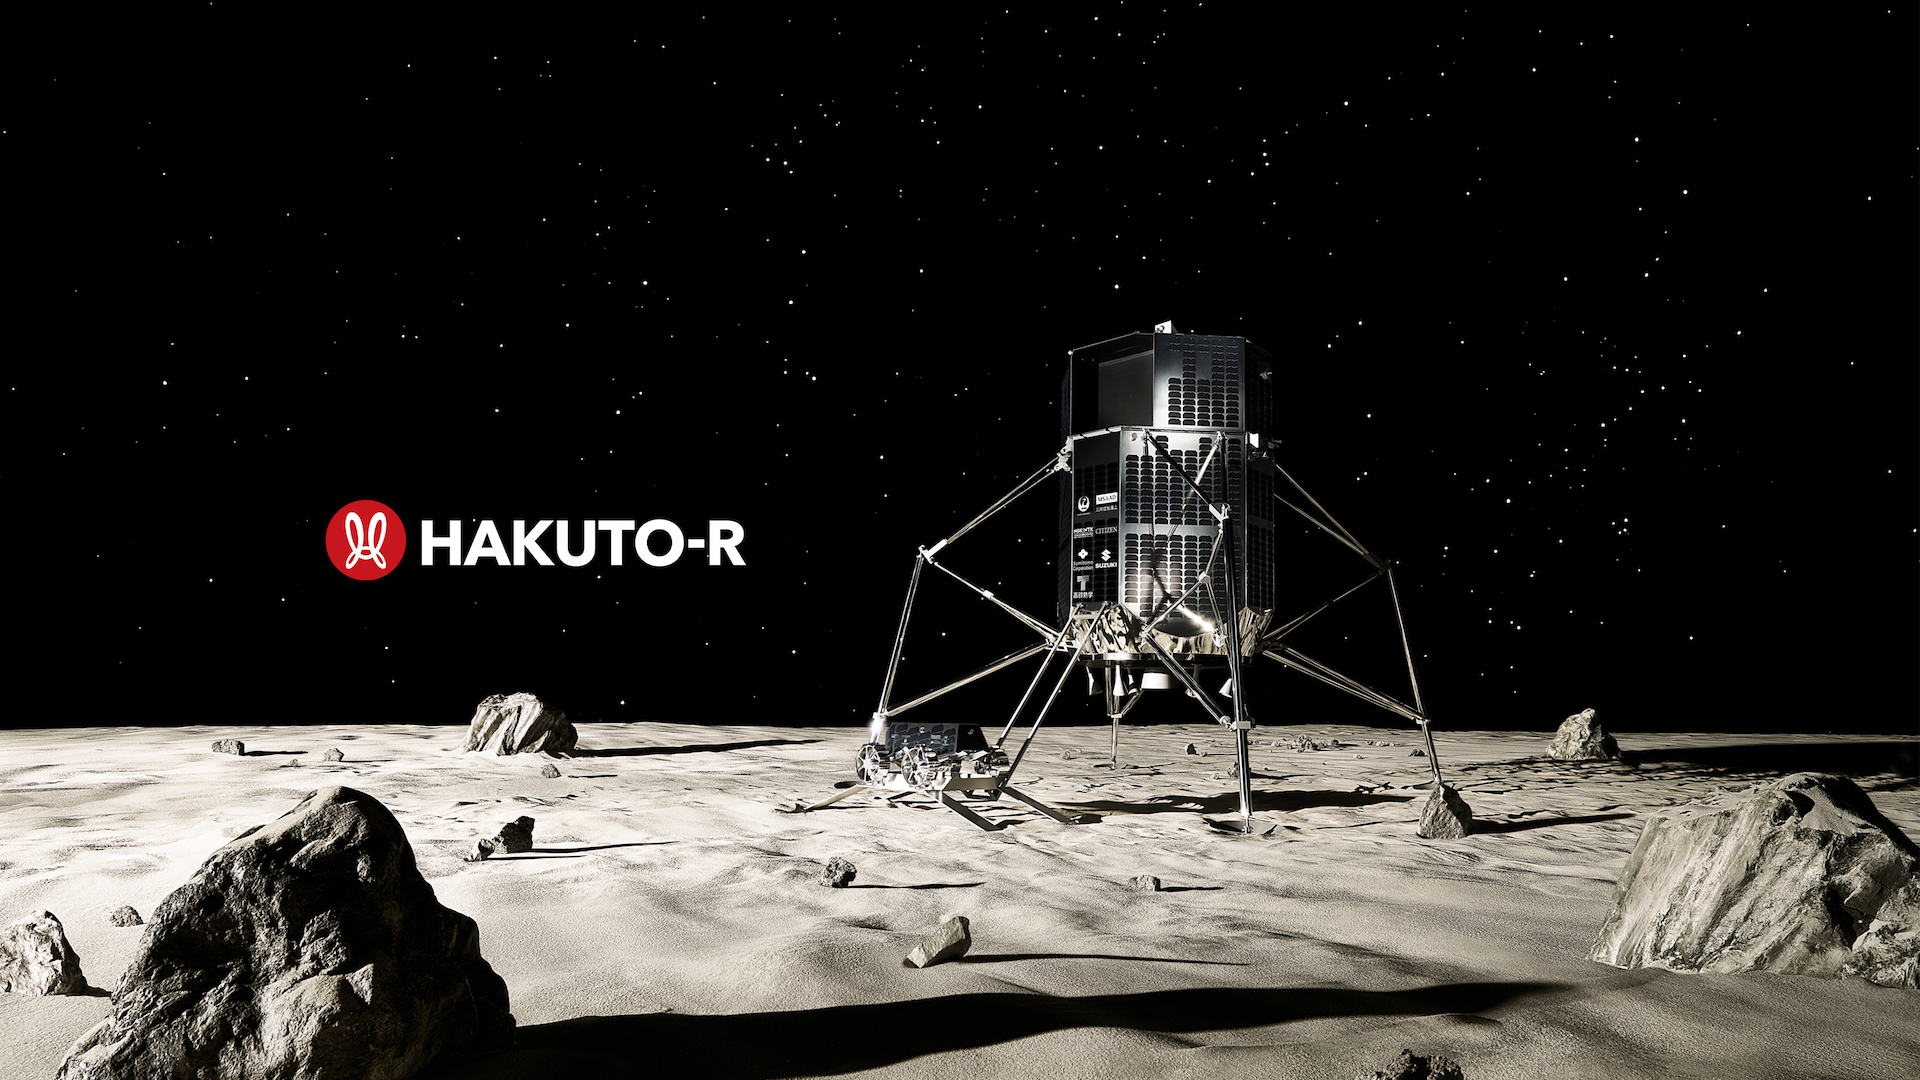 HAKUTO-R ispace, Inc. Japan space exploration